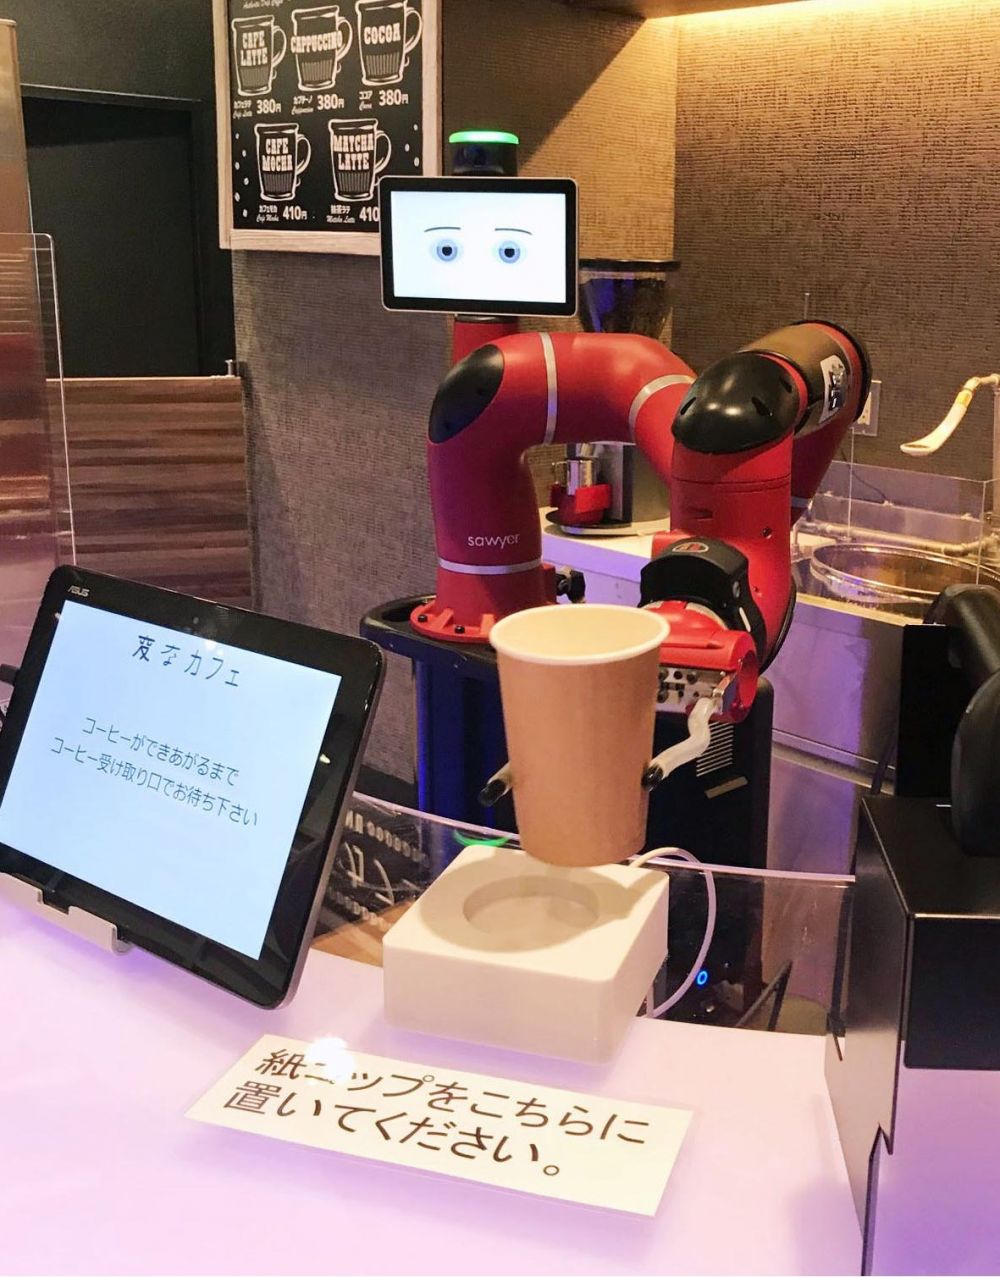 Beli kopi di kafe ini kamu bakal dilayani barista robot